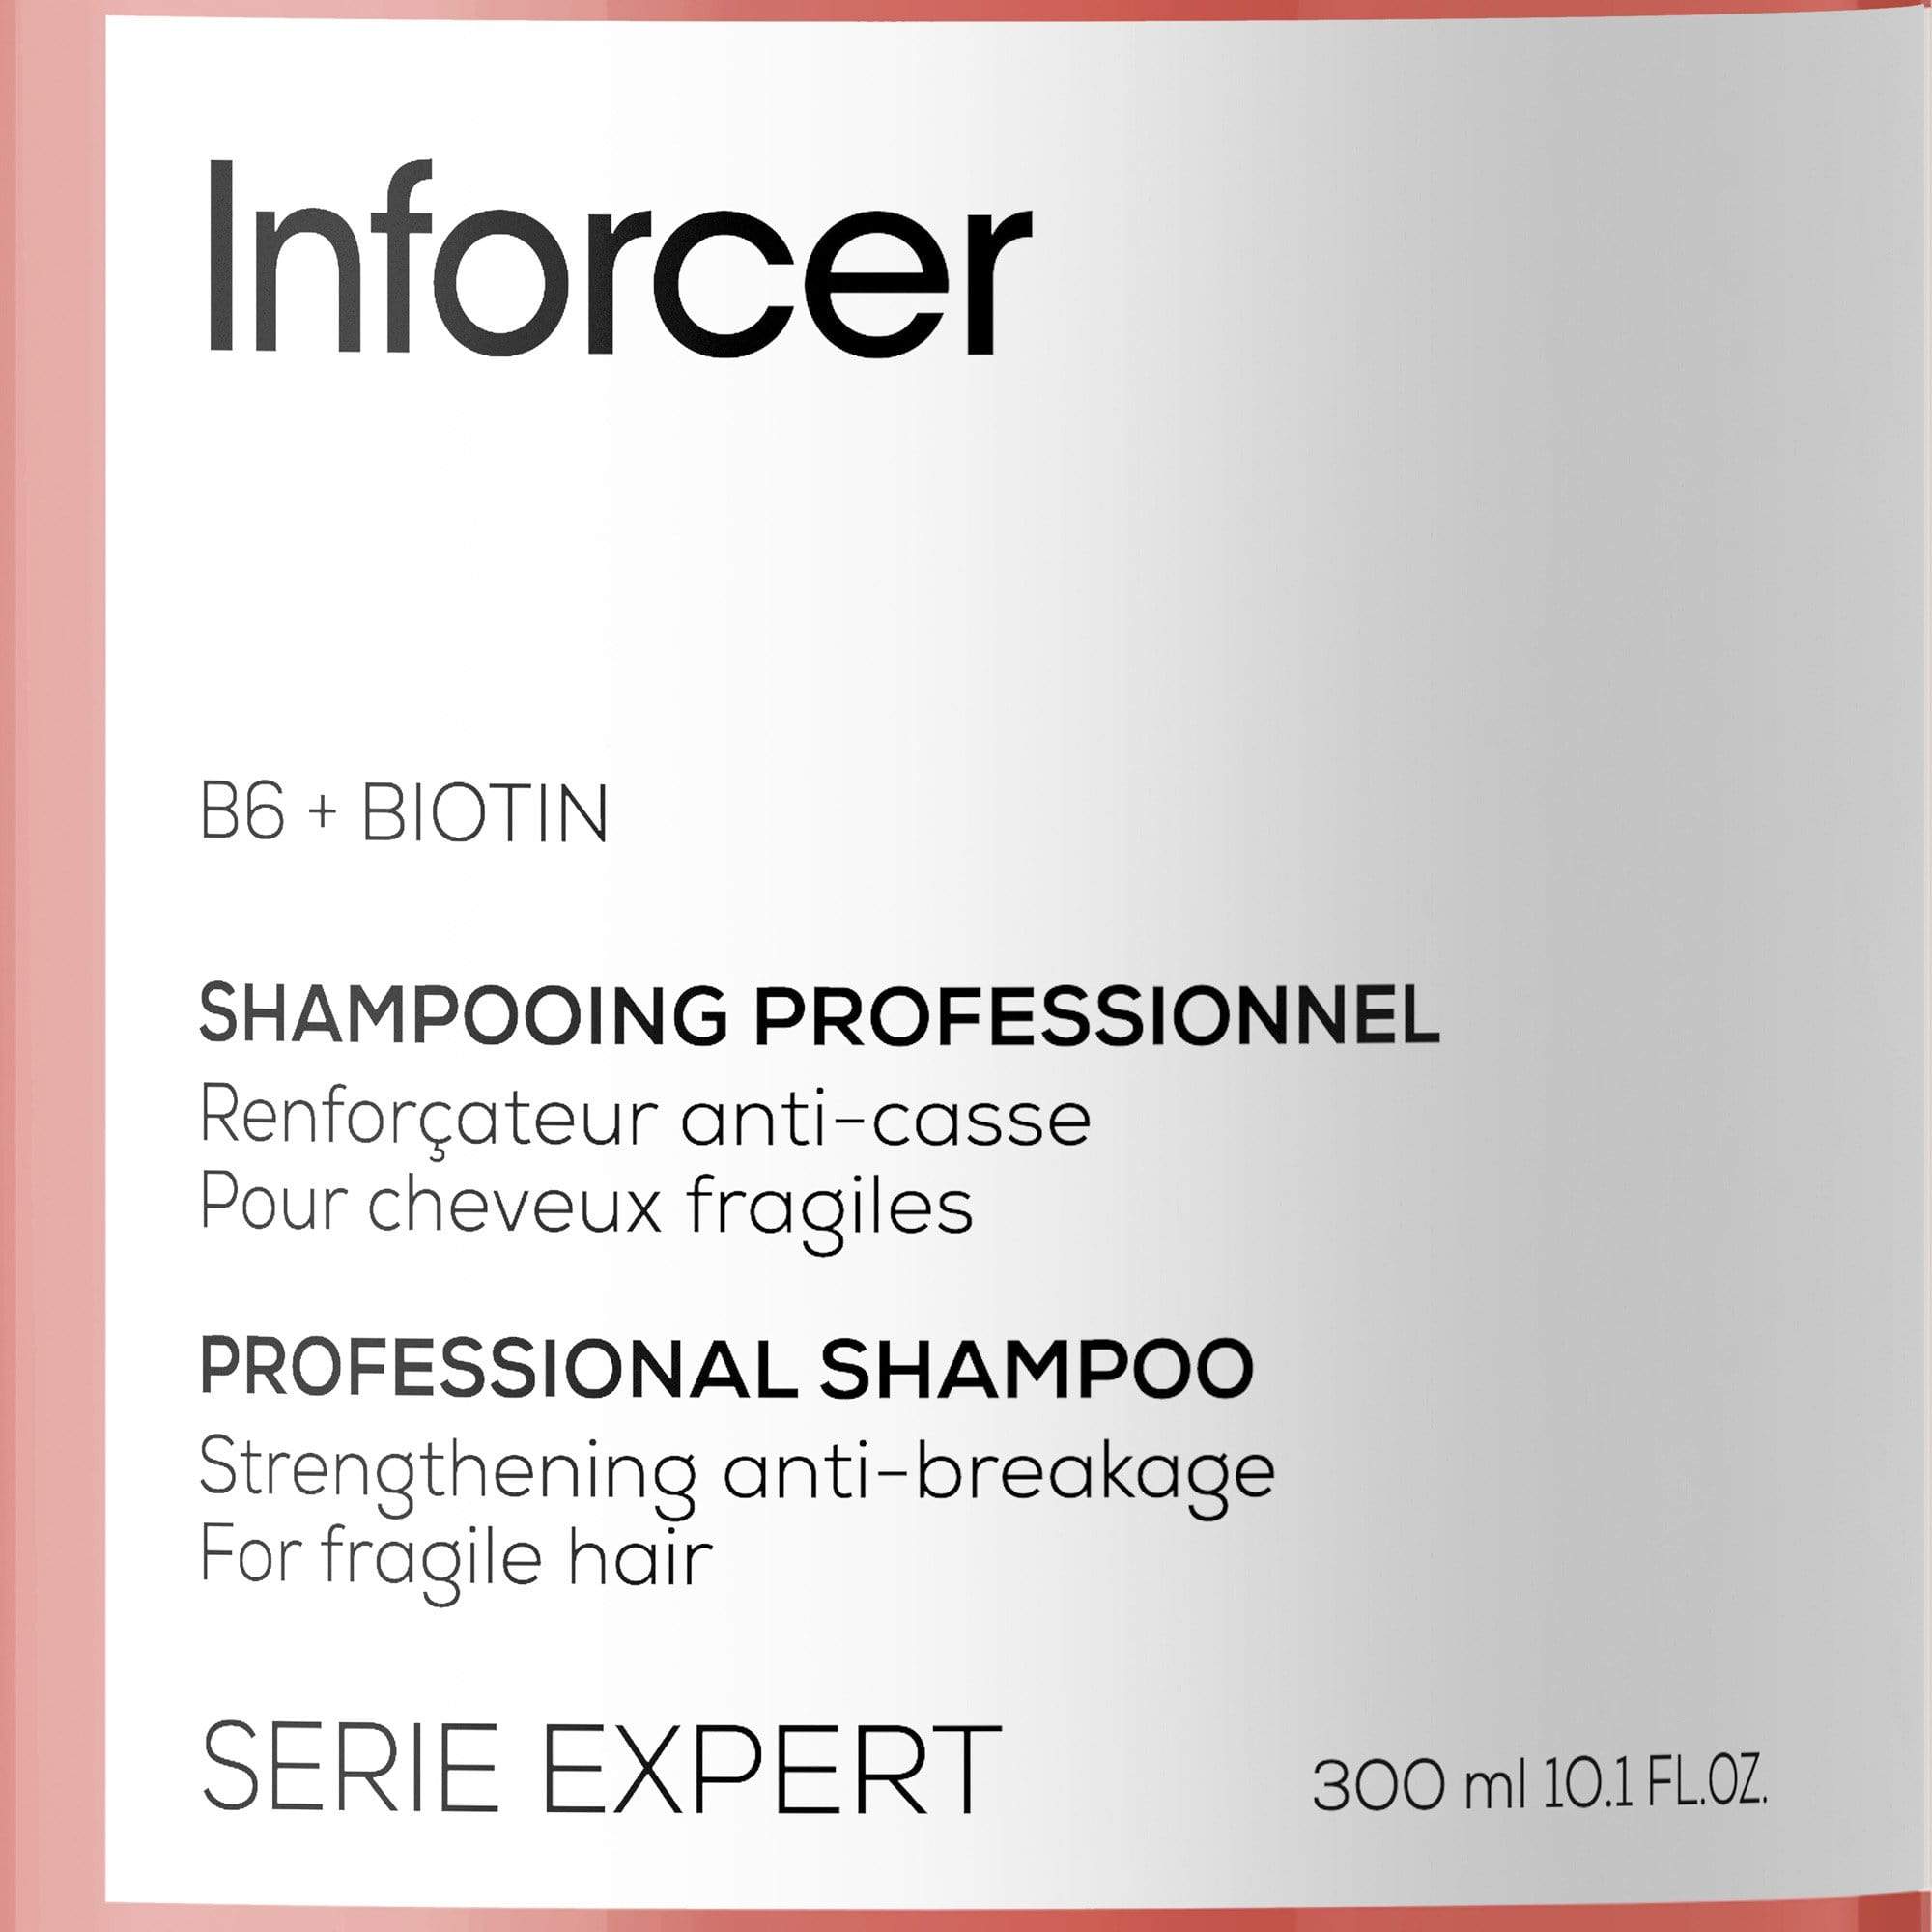 L'Oréal Professionnel Hair Care Champú Inforcer 300ml Roberta Beauty Club